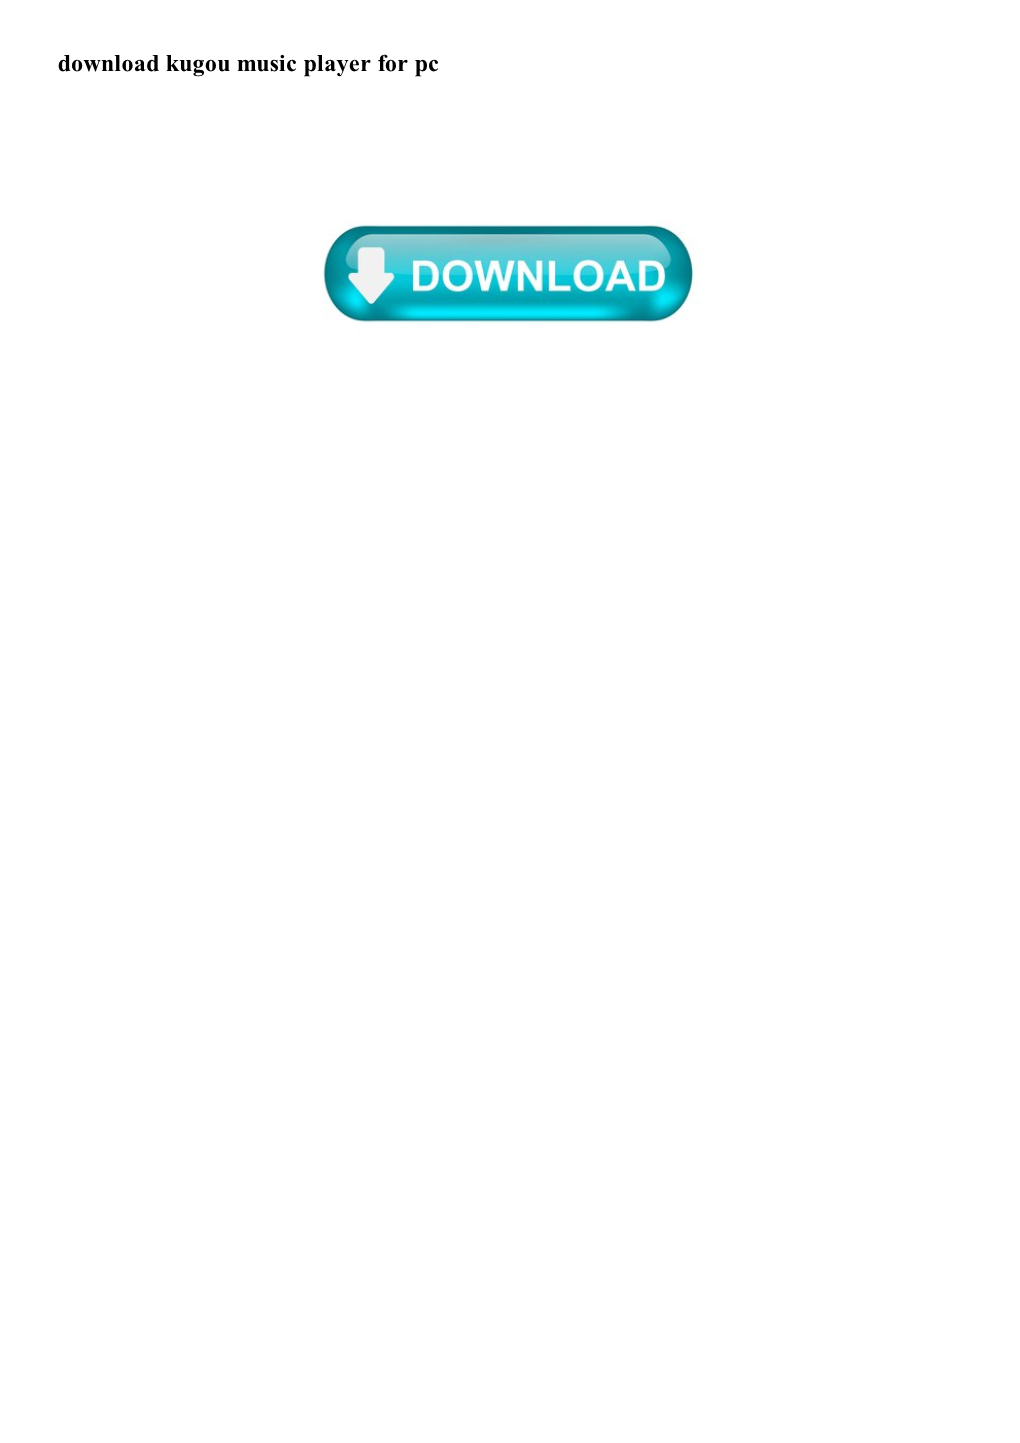 Download Kugou Music Player for Pc Desktopmmd3 Miss Fish Free Download Game PC Version